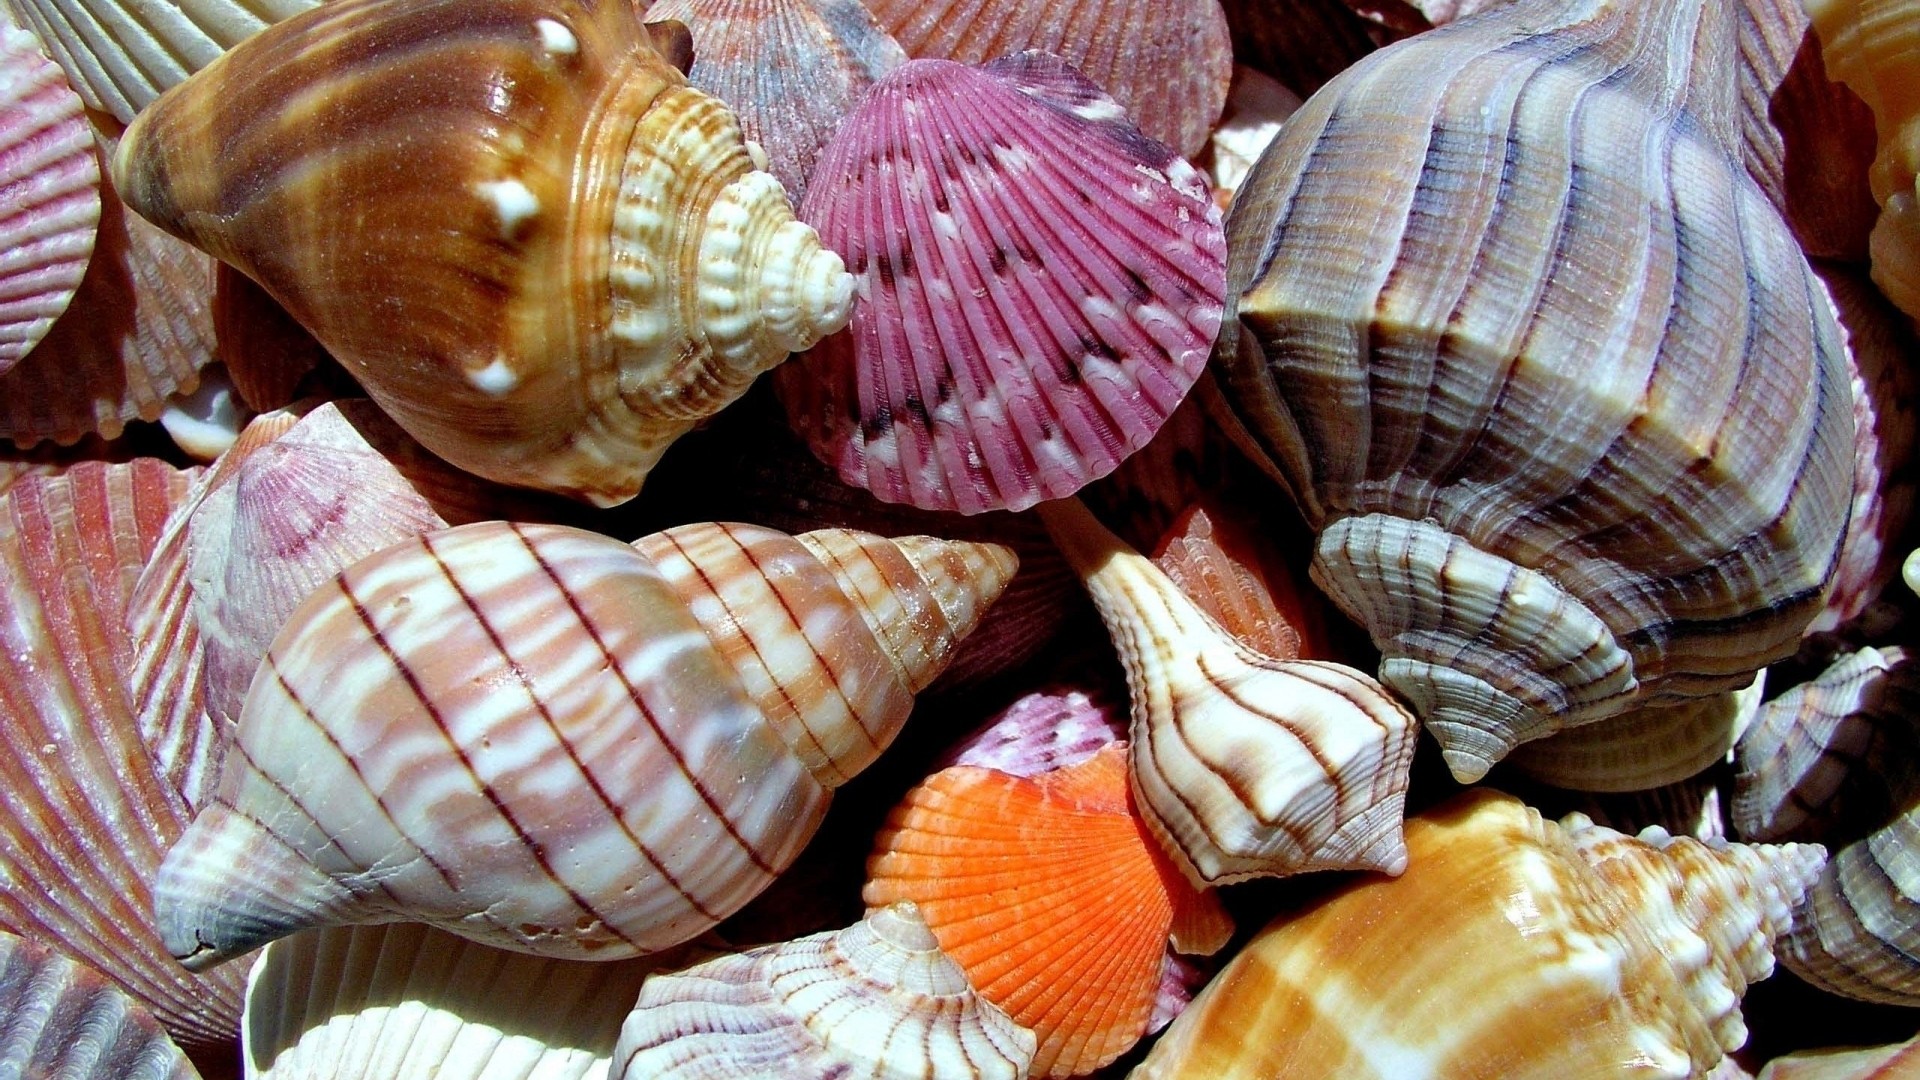 Sea Shell Wallpapers